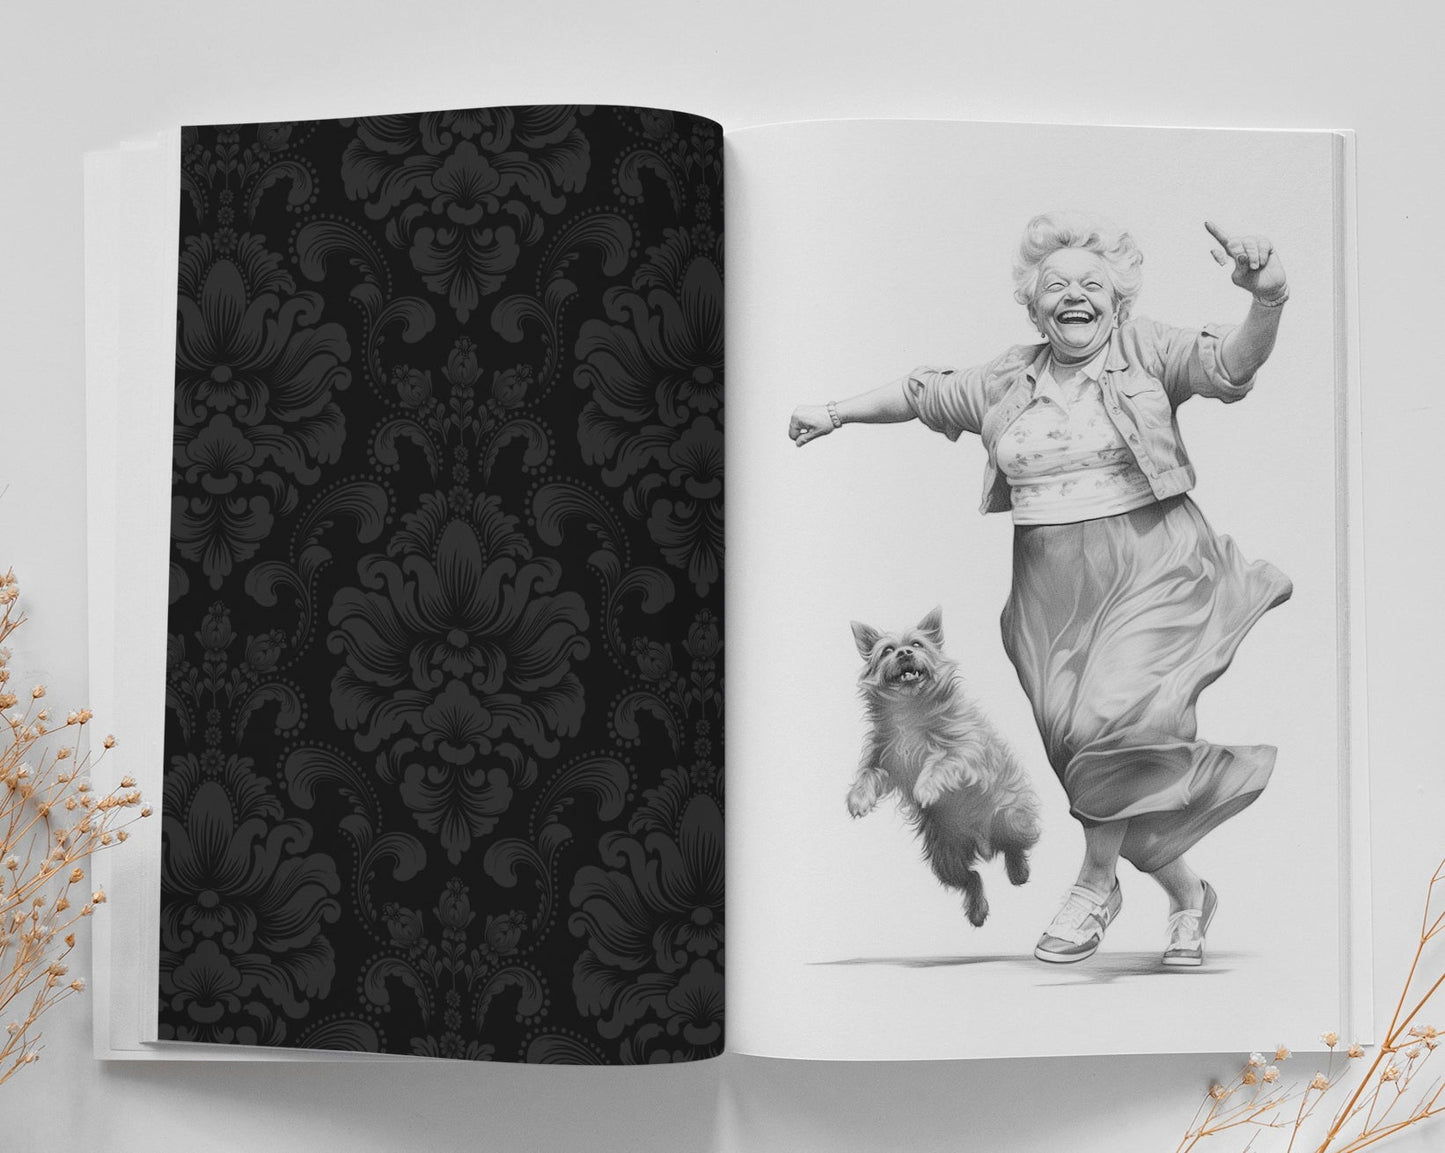 Crazy Grandma Coloring Book Graysale 2 (Digital) - Monsoon Publishing USA